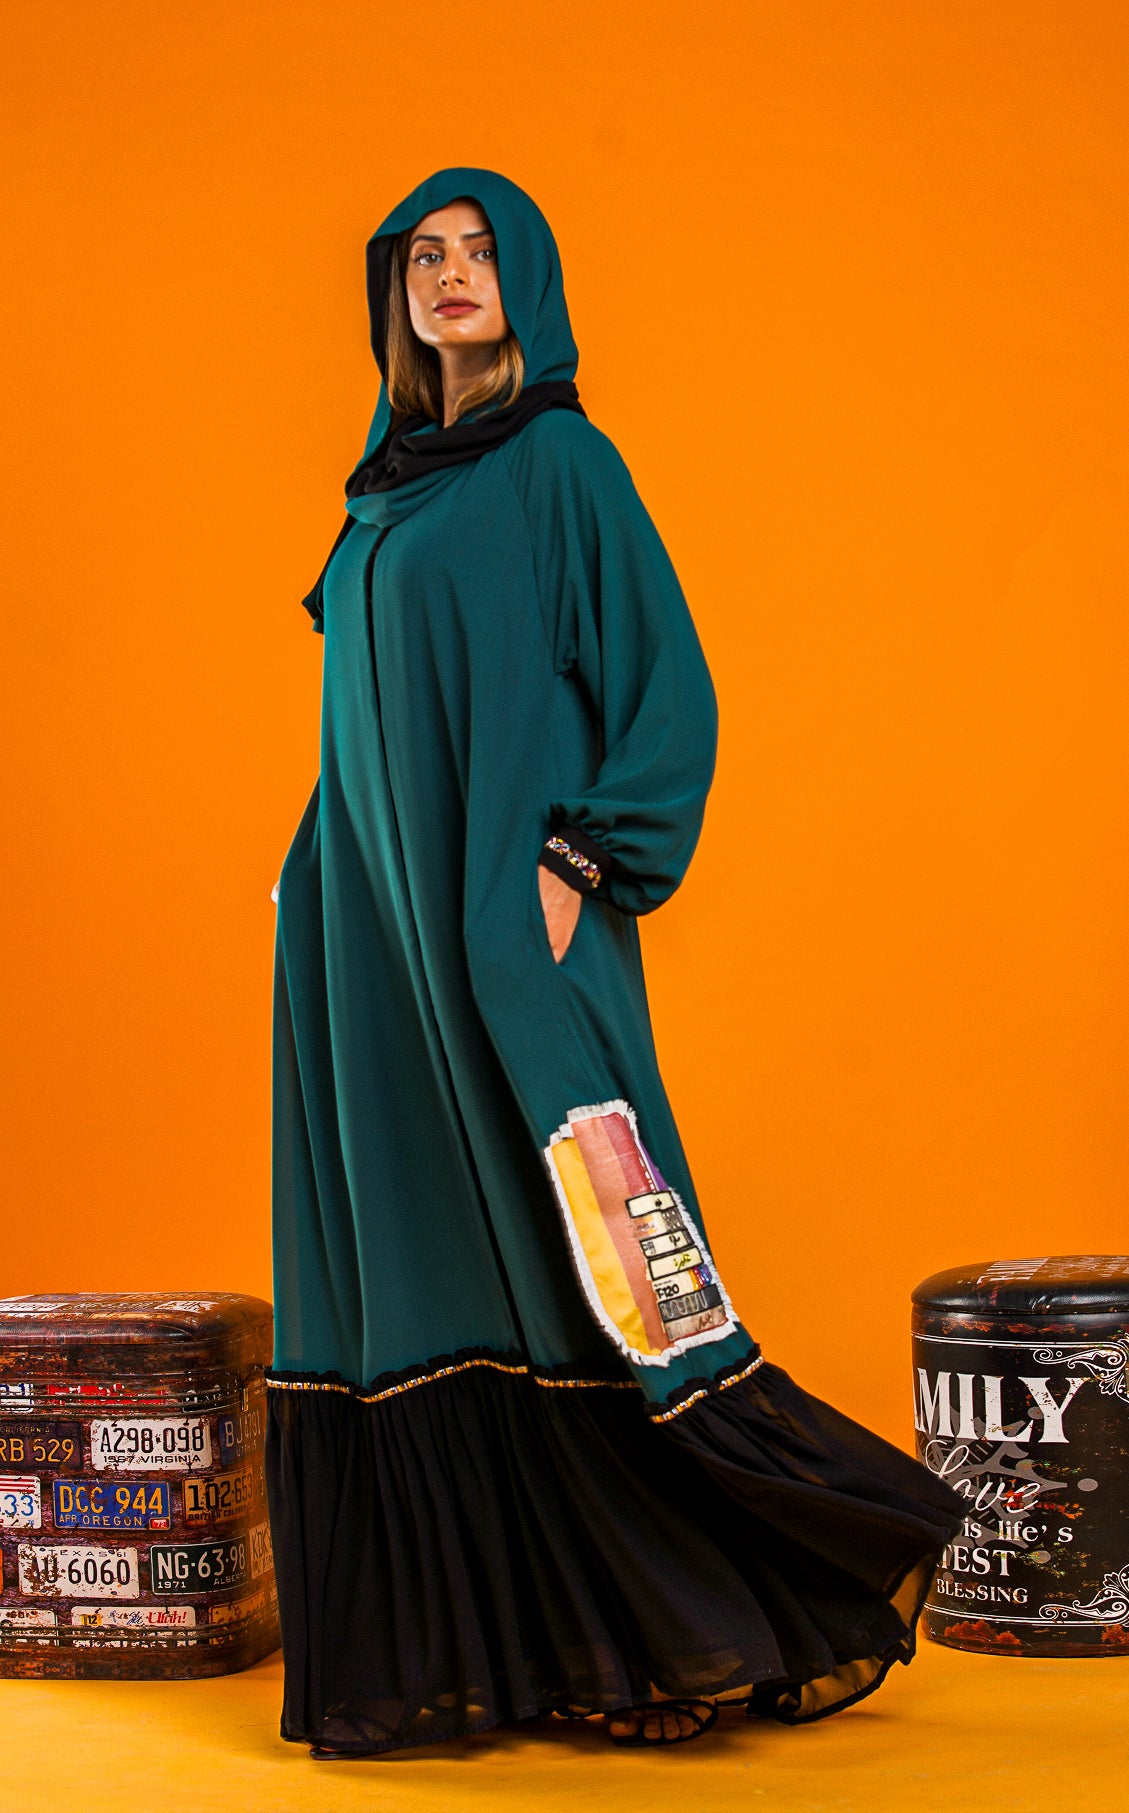 Kasit Abaya: Luxurious navy blue abaya | Fashion by Shehna